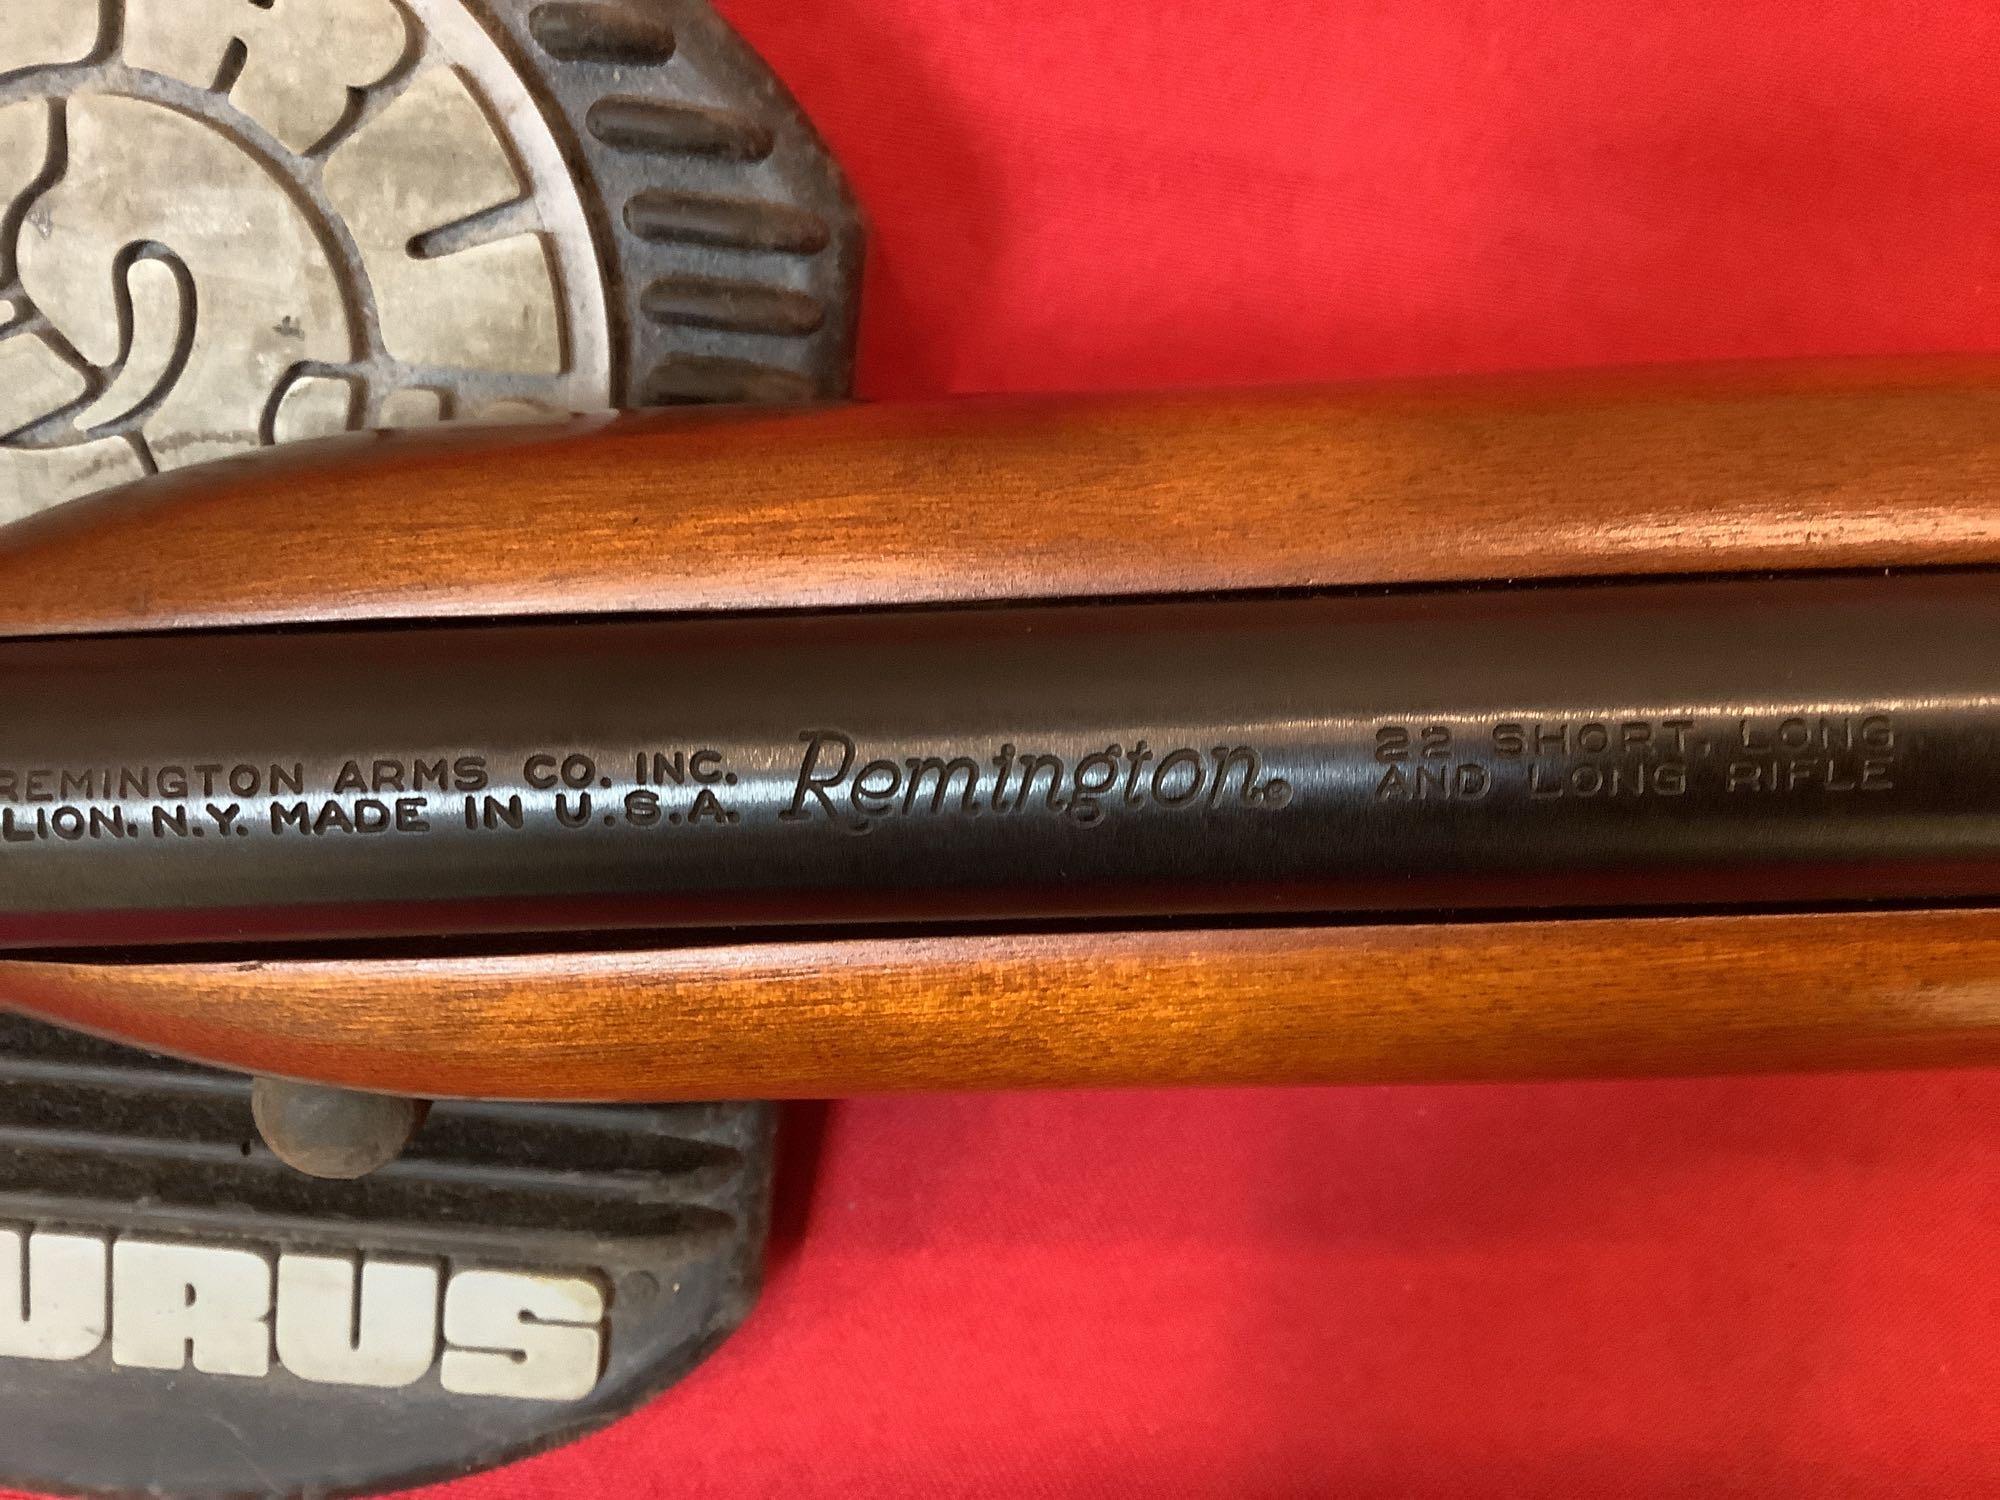 Remington mod. 552 Speedmaster Rifle